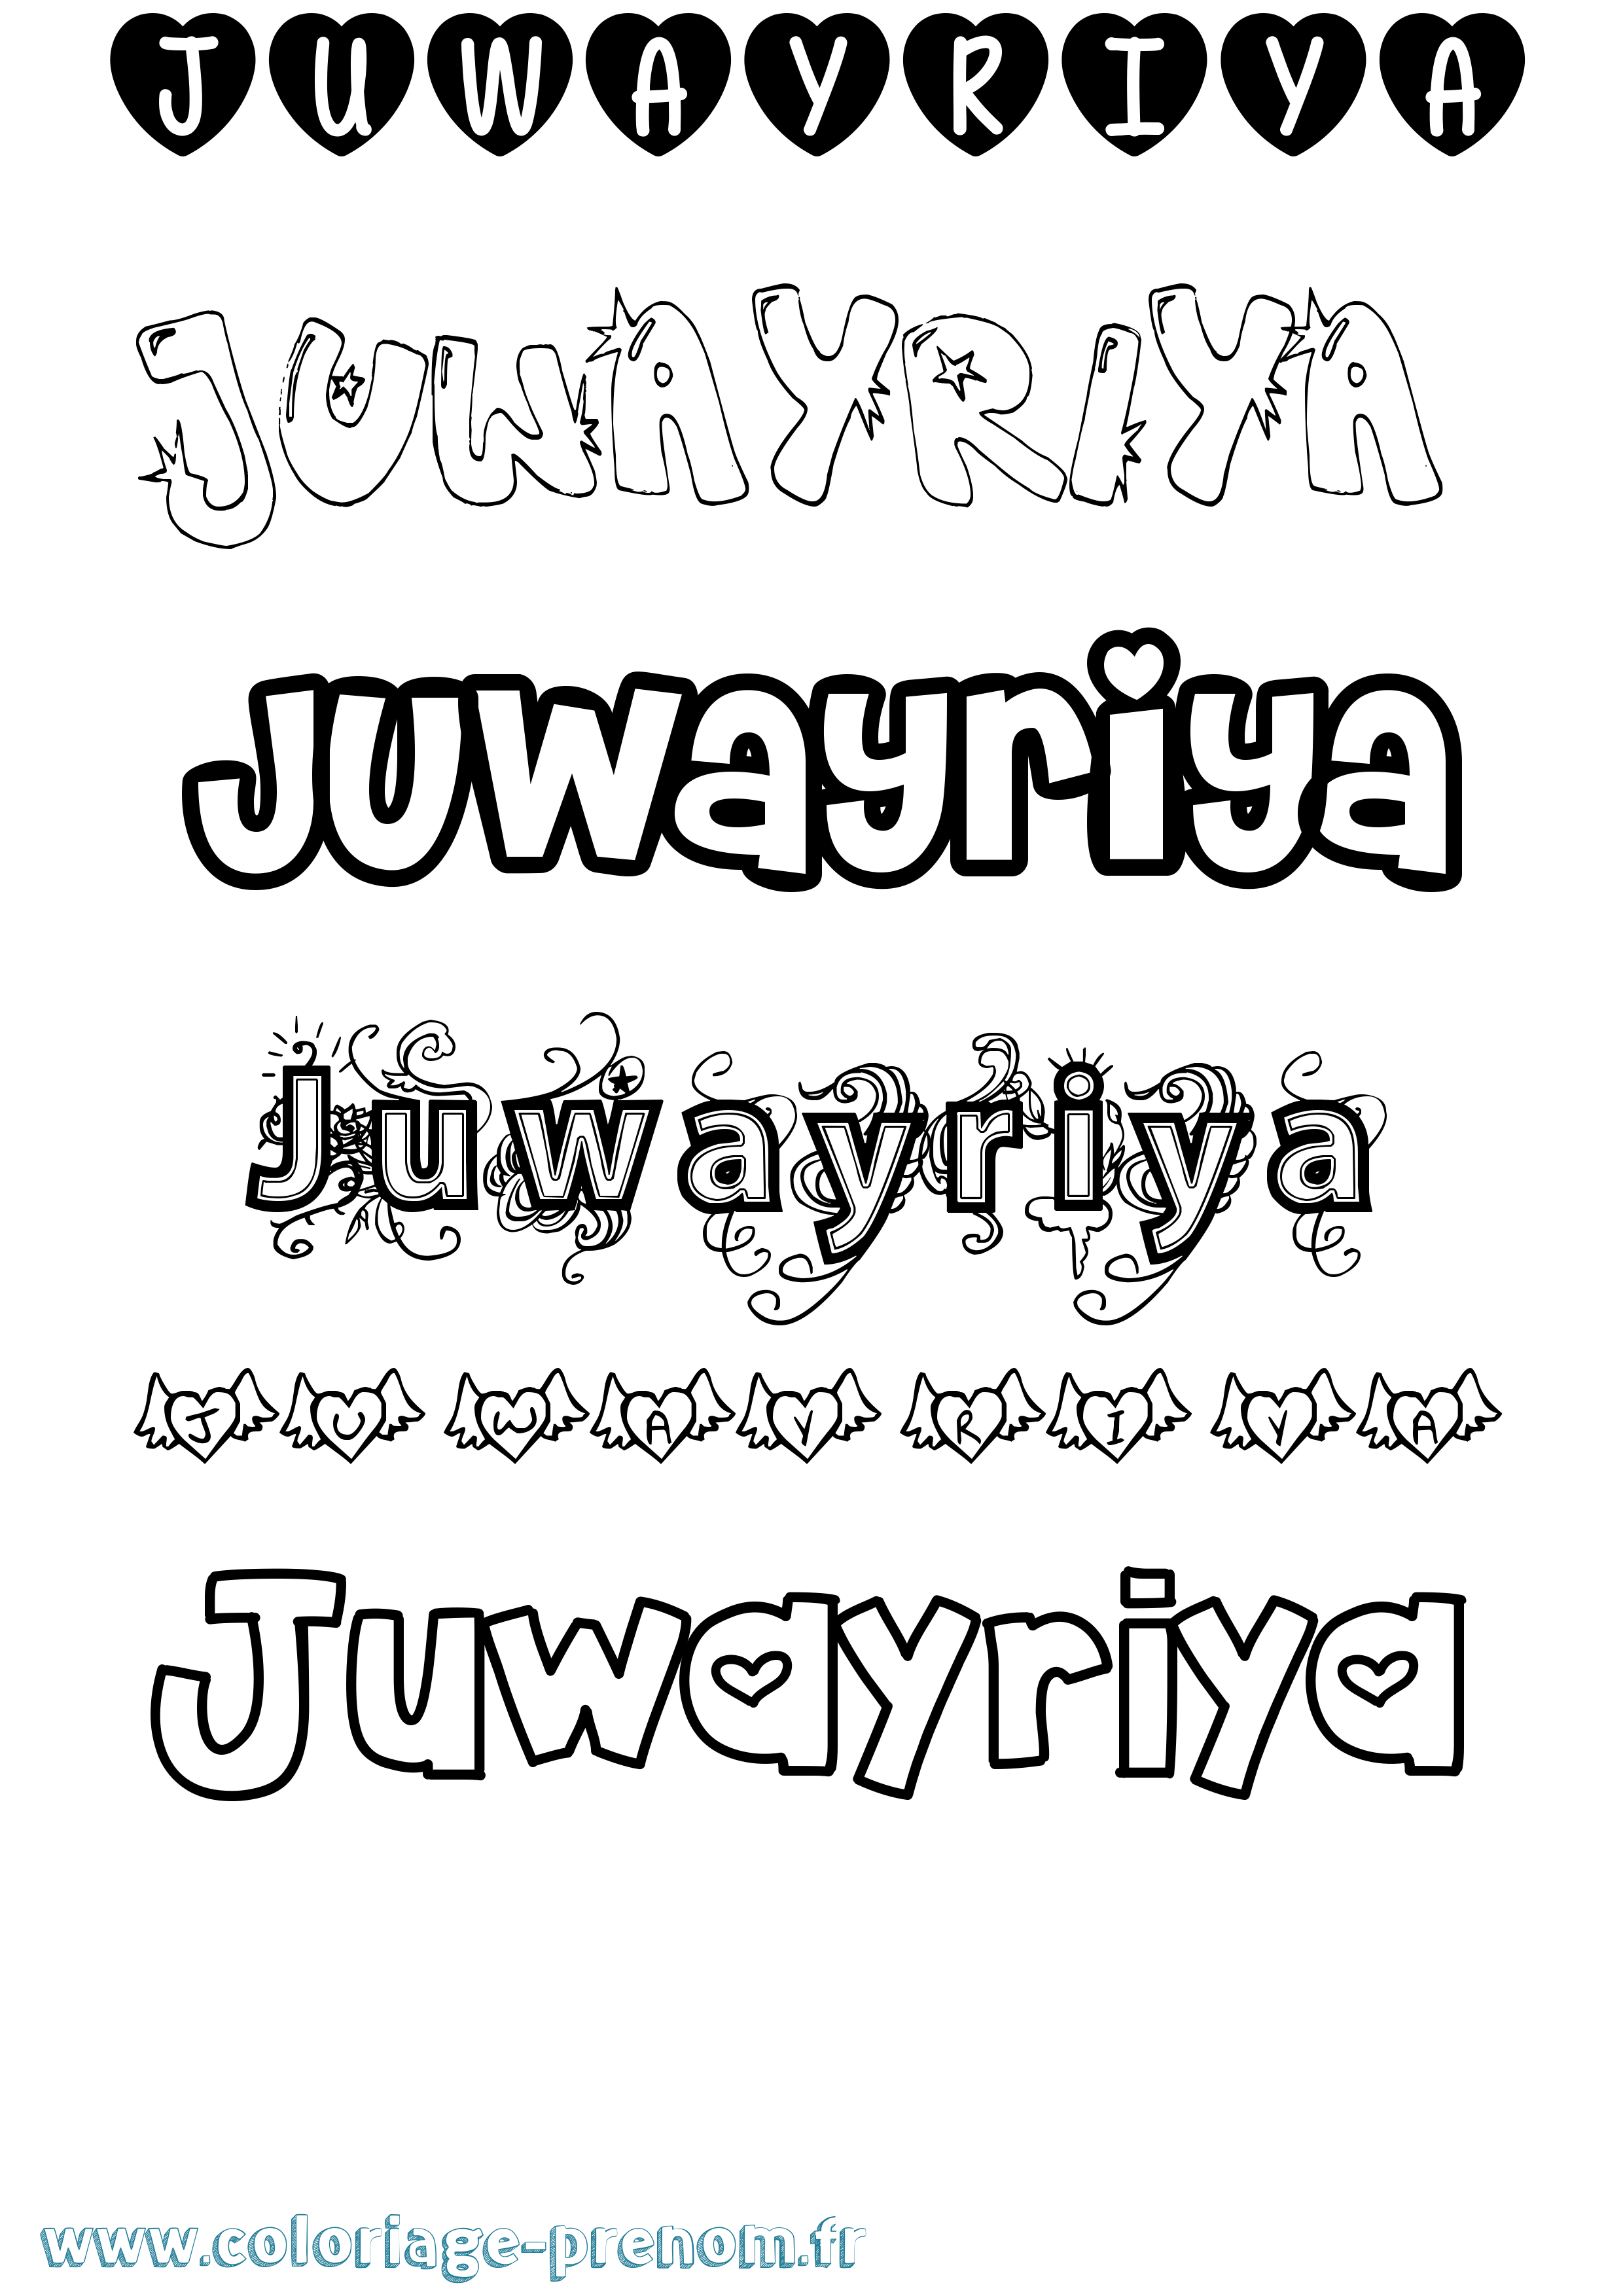 Coloriage prénom Juwayriya Girly